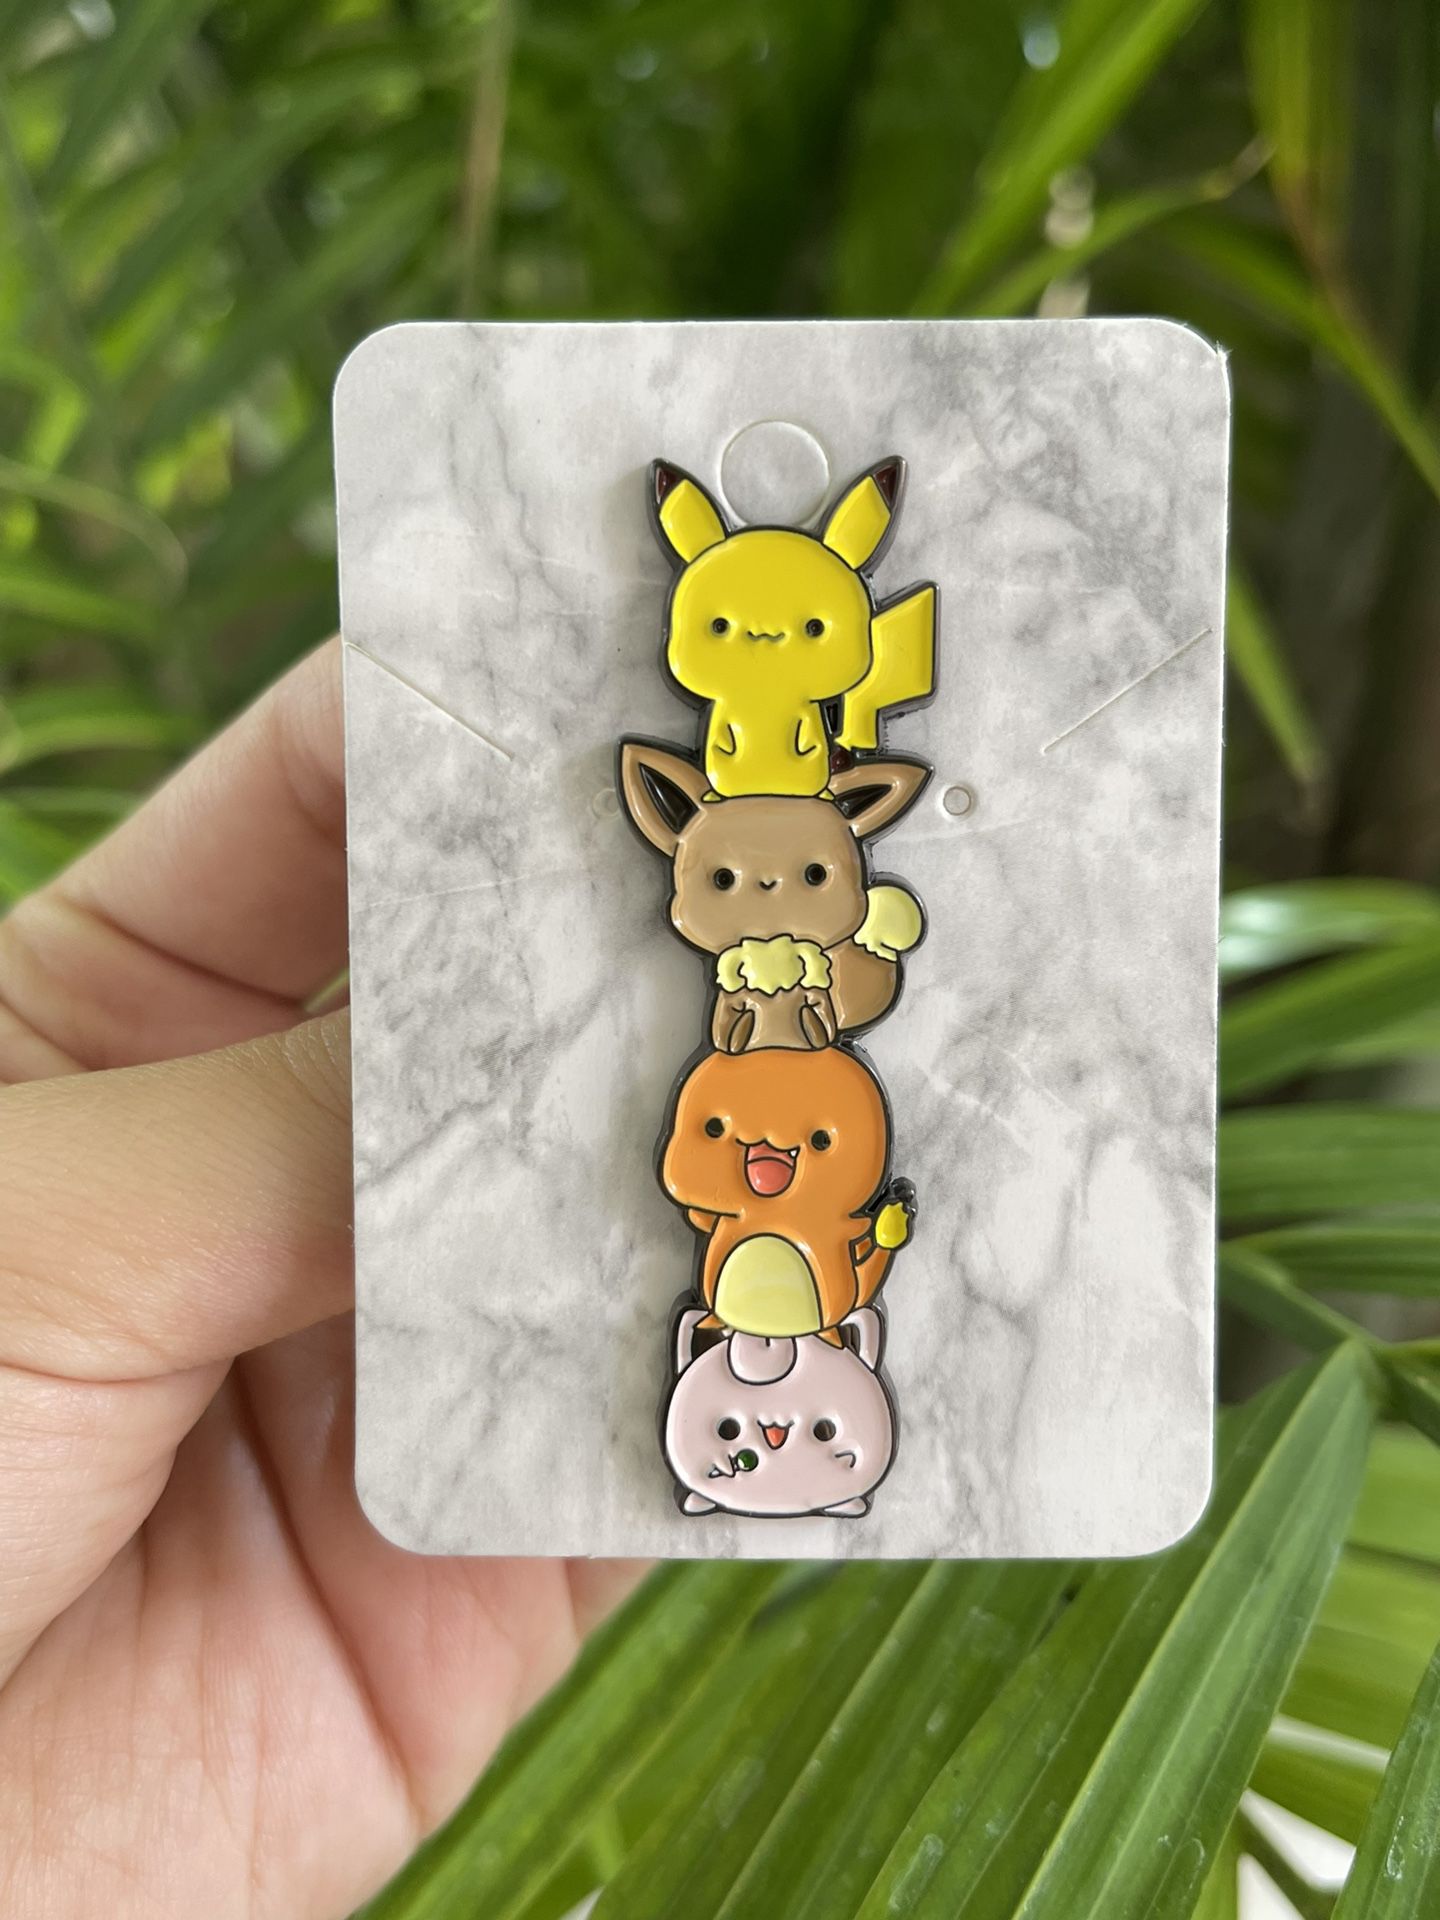 Pikachu, Charmander Totem Pole Pokemon Pin